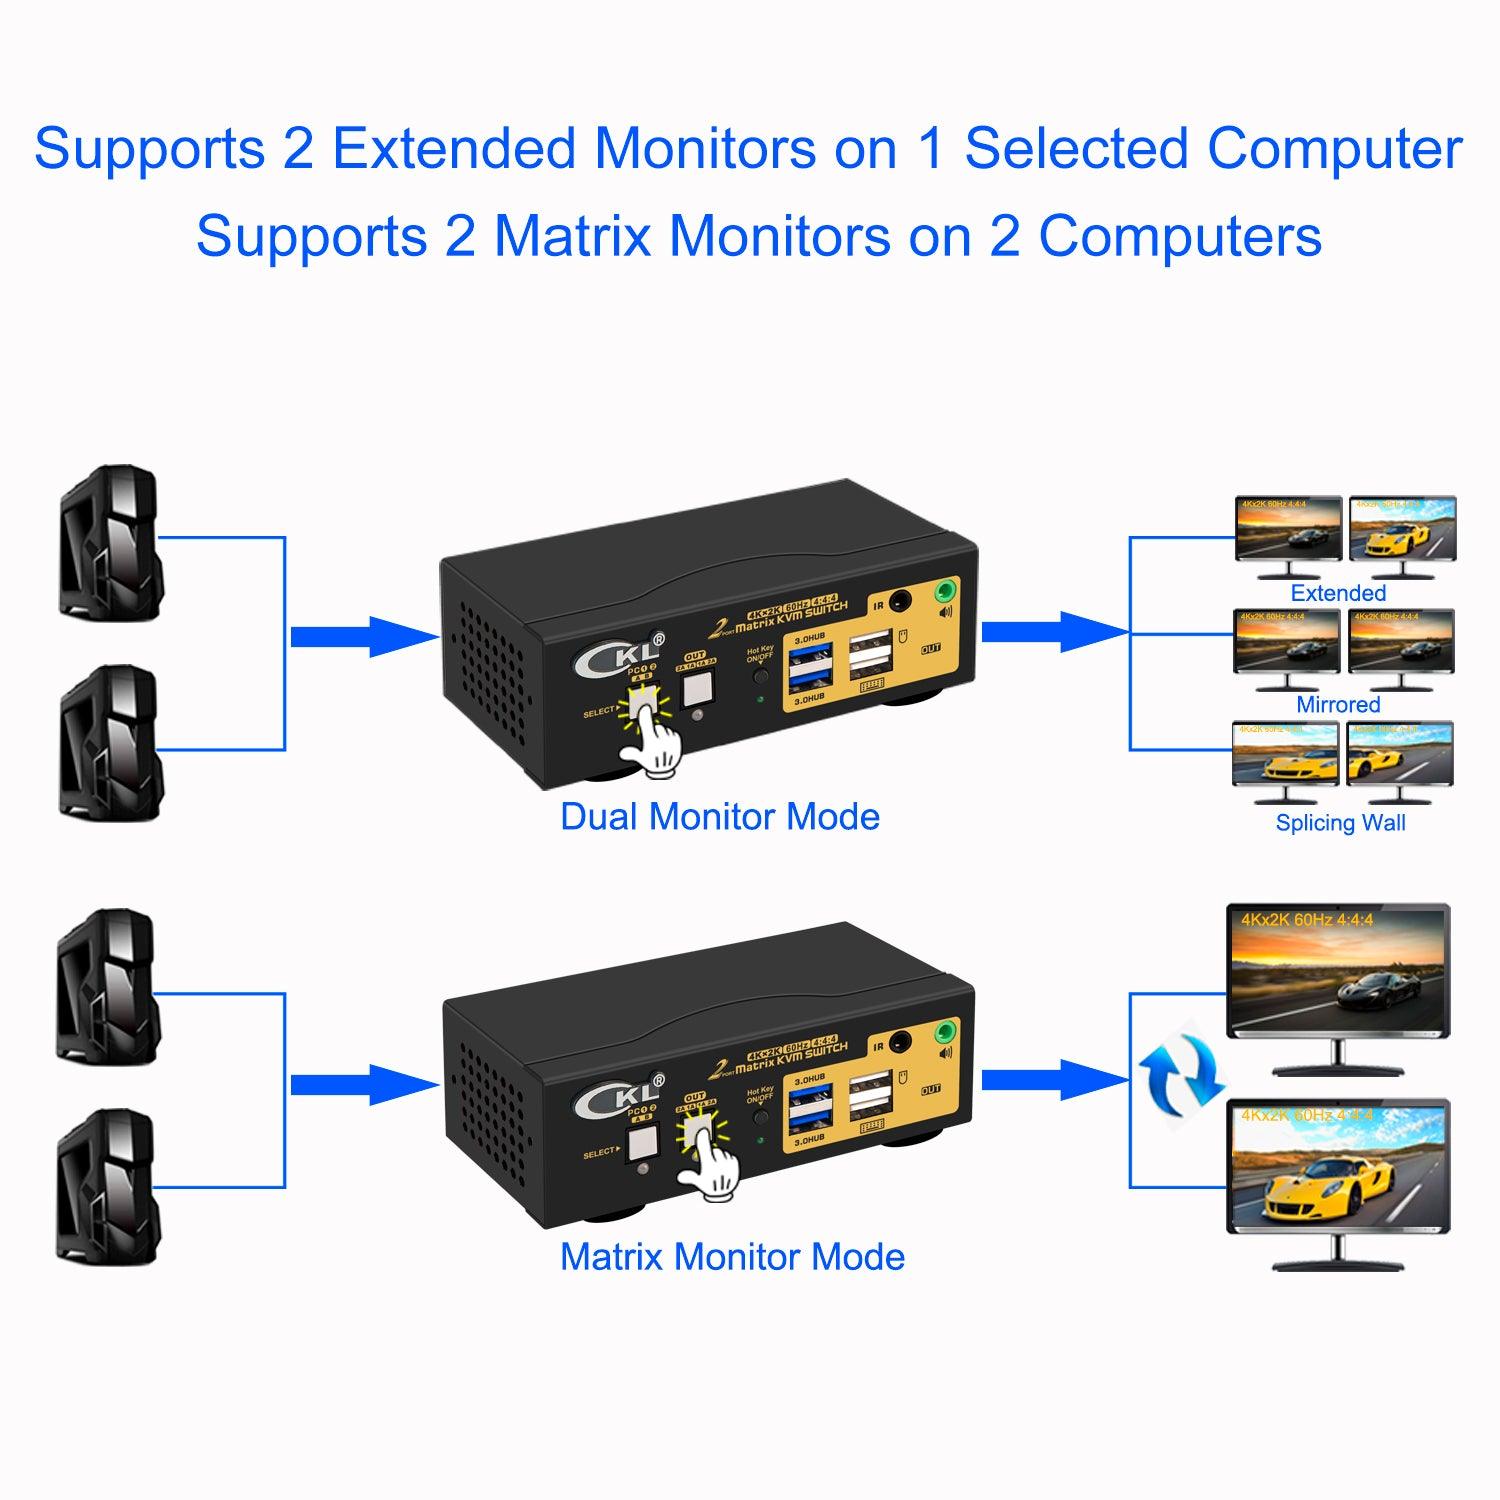 2x2 USB 3.0 Matrix KVM Switch Dual Monitor DisplayPort 1.2 4K 60Hz CKL-622DP-M - CKL KVM Switches